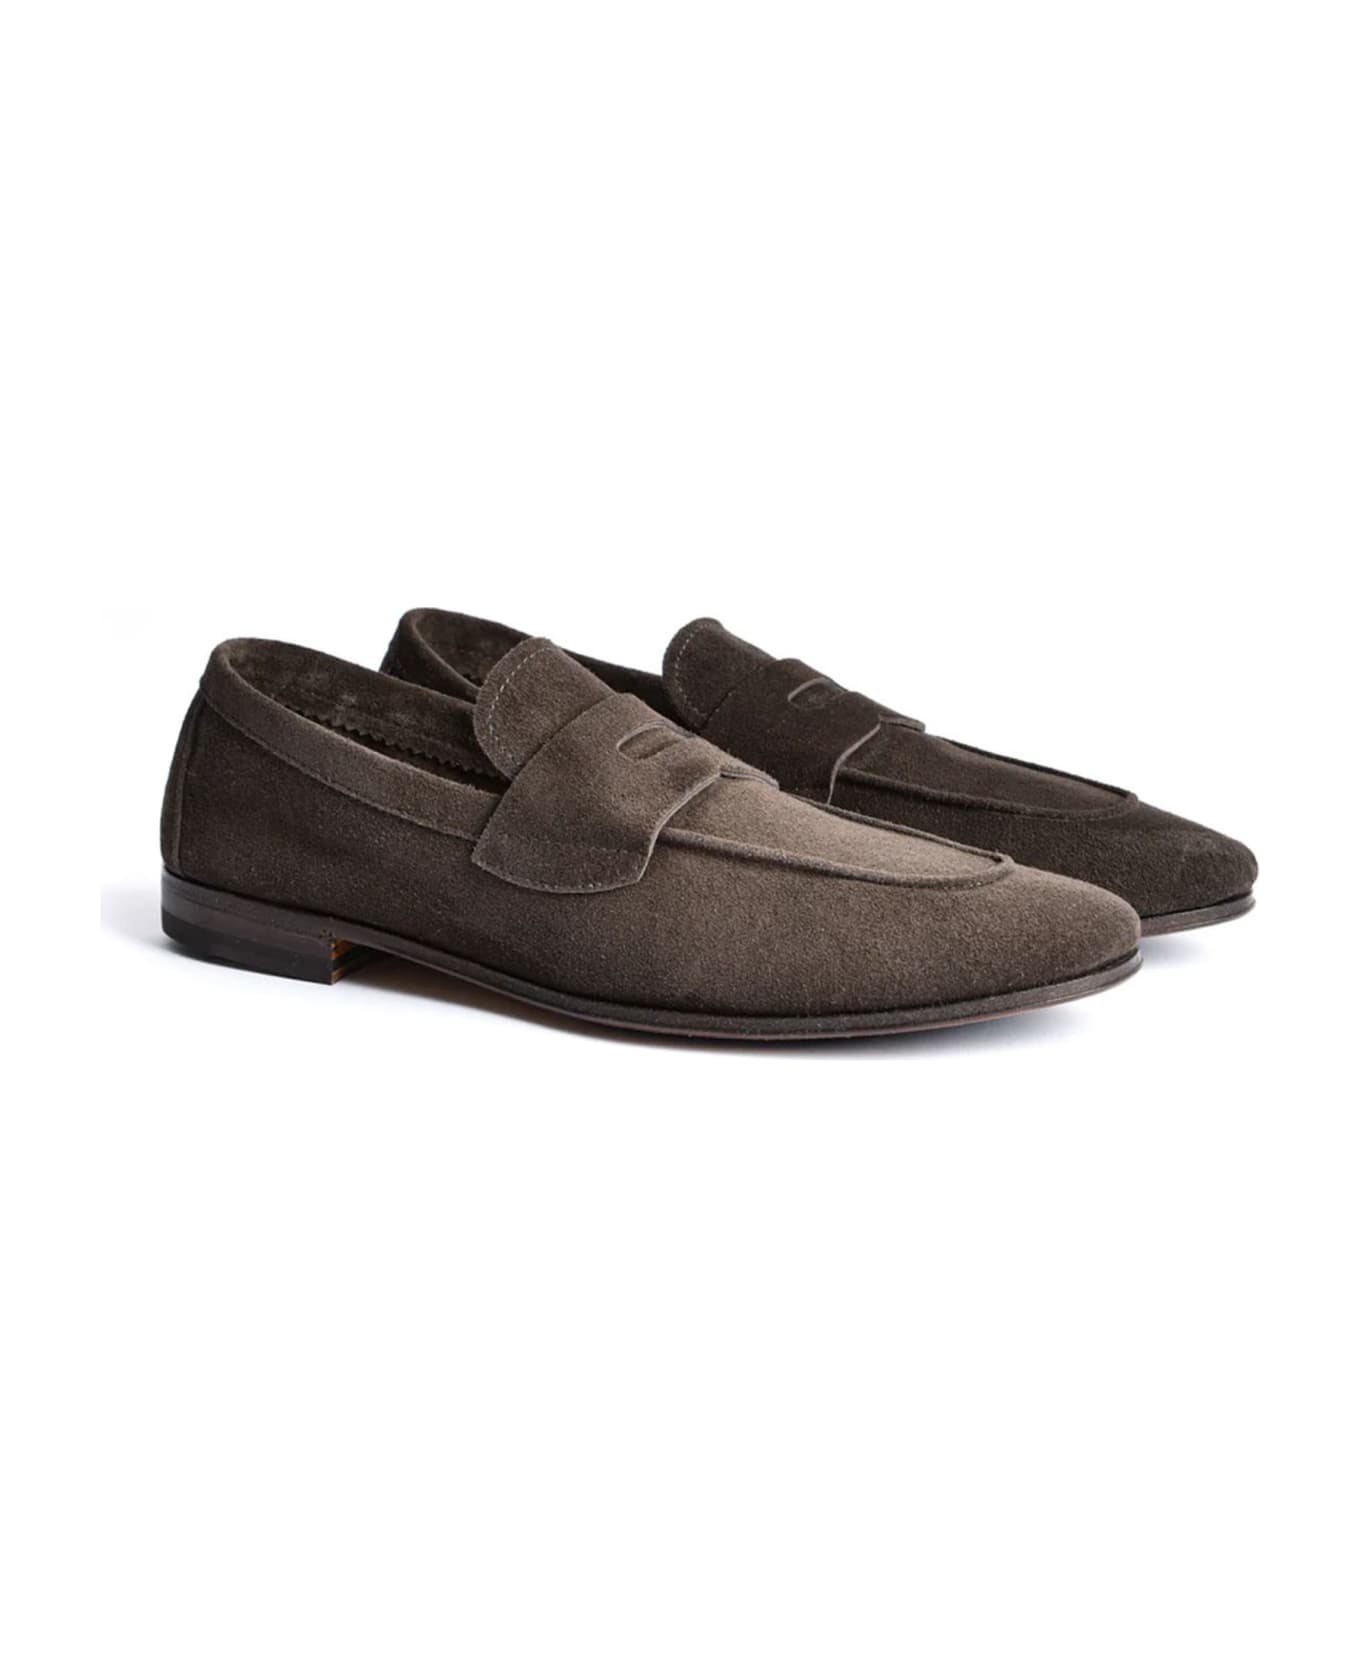 Henderson Baracco Henderson Flat Shoes Brown - Brown